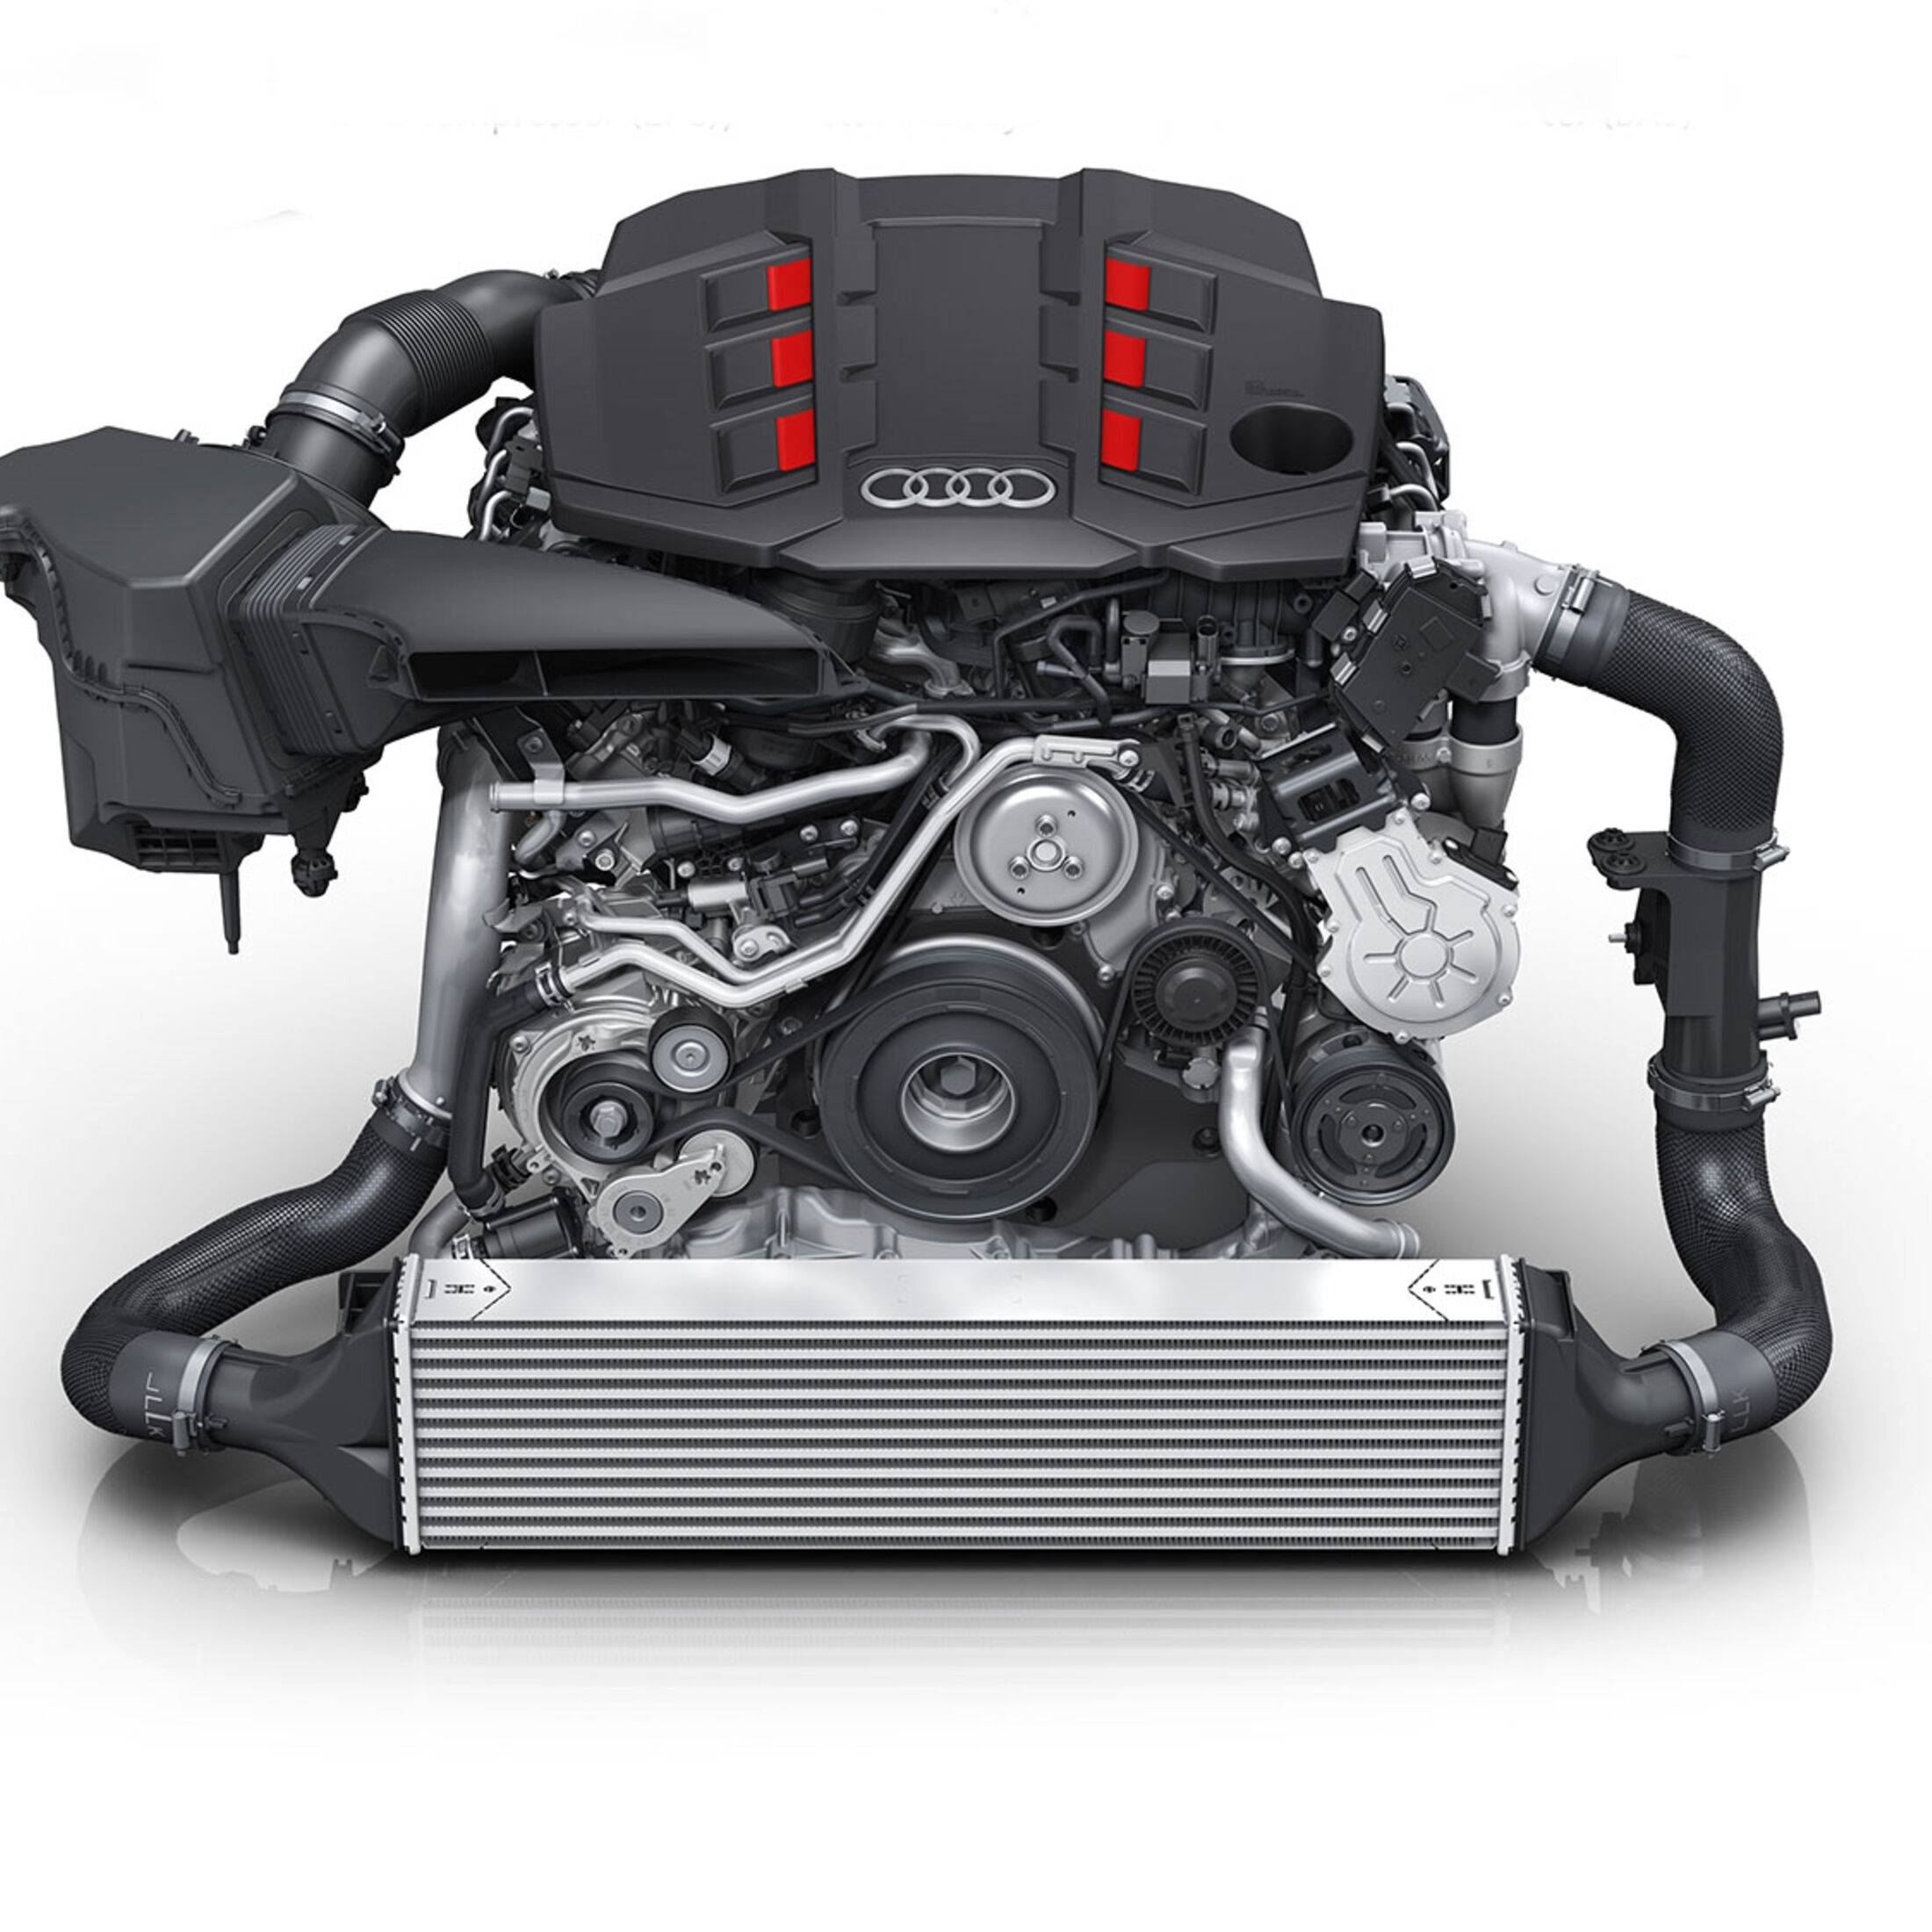 https://imgr1.auto-motor-und-sport.de/Audi-S6-3-0-TDI-V6-jsonLd1x1-cb510912-1994075.jpg